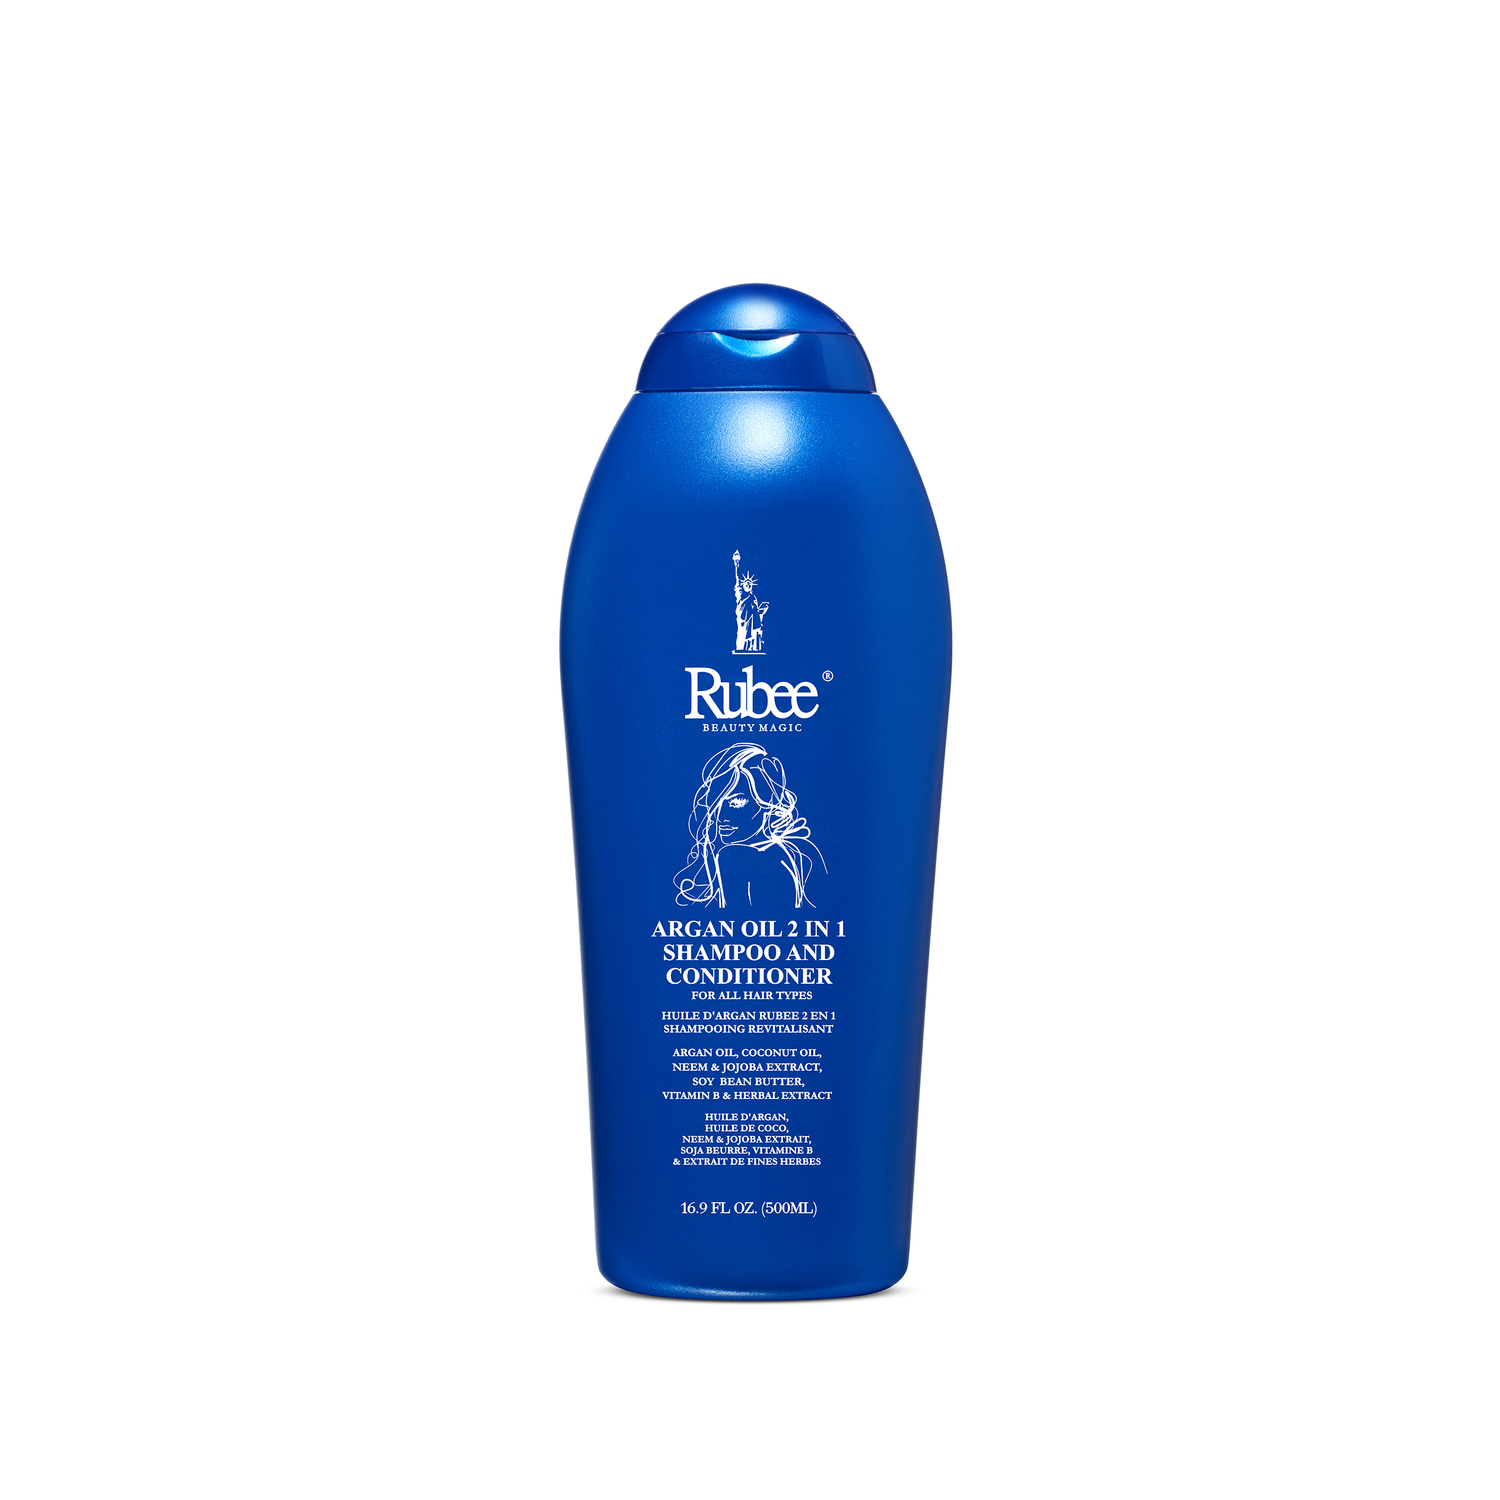 Rubee Argan Oil 2 in 1 Shampoo &amp; Conditioner